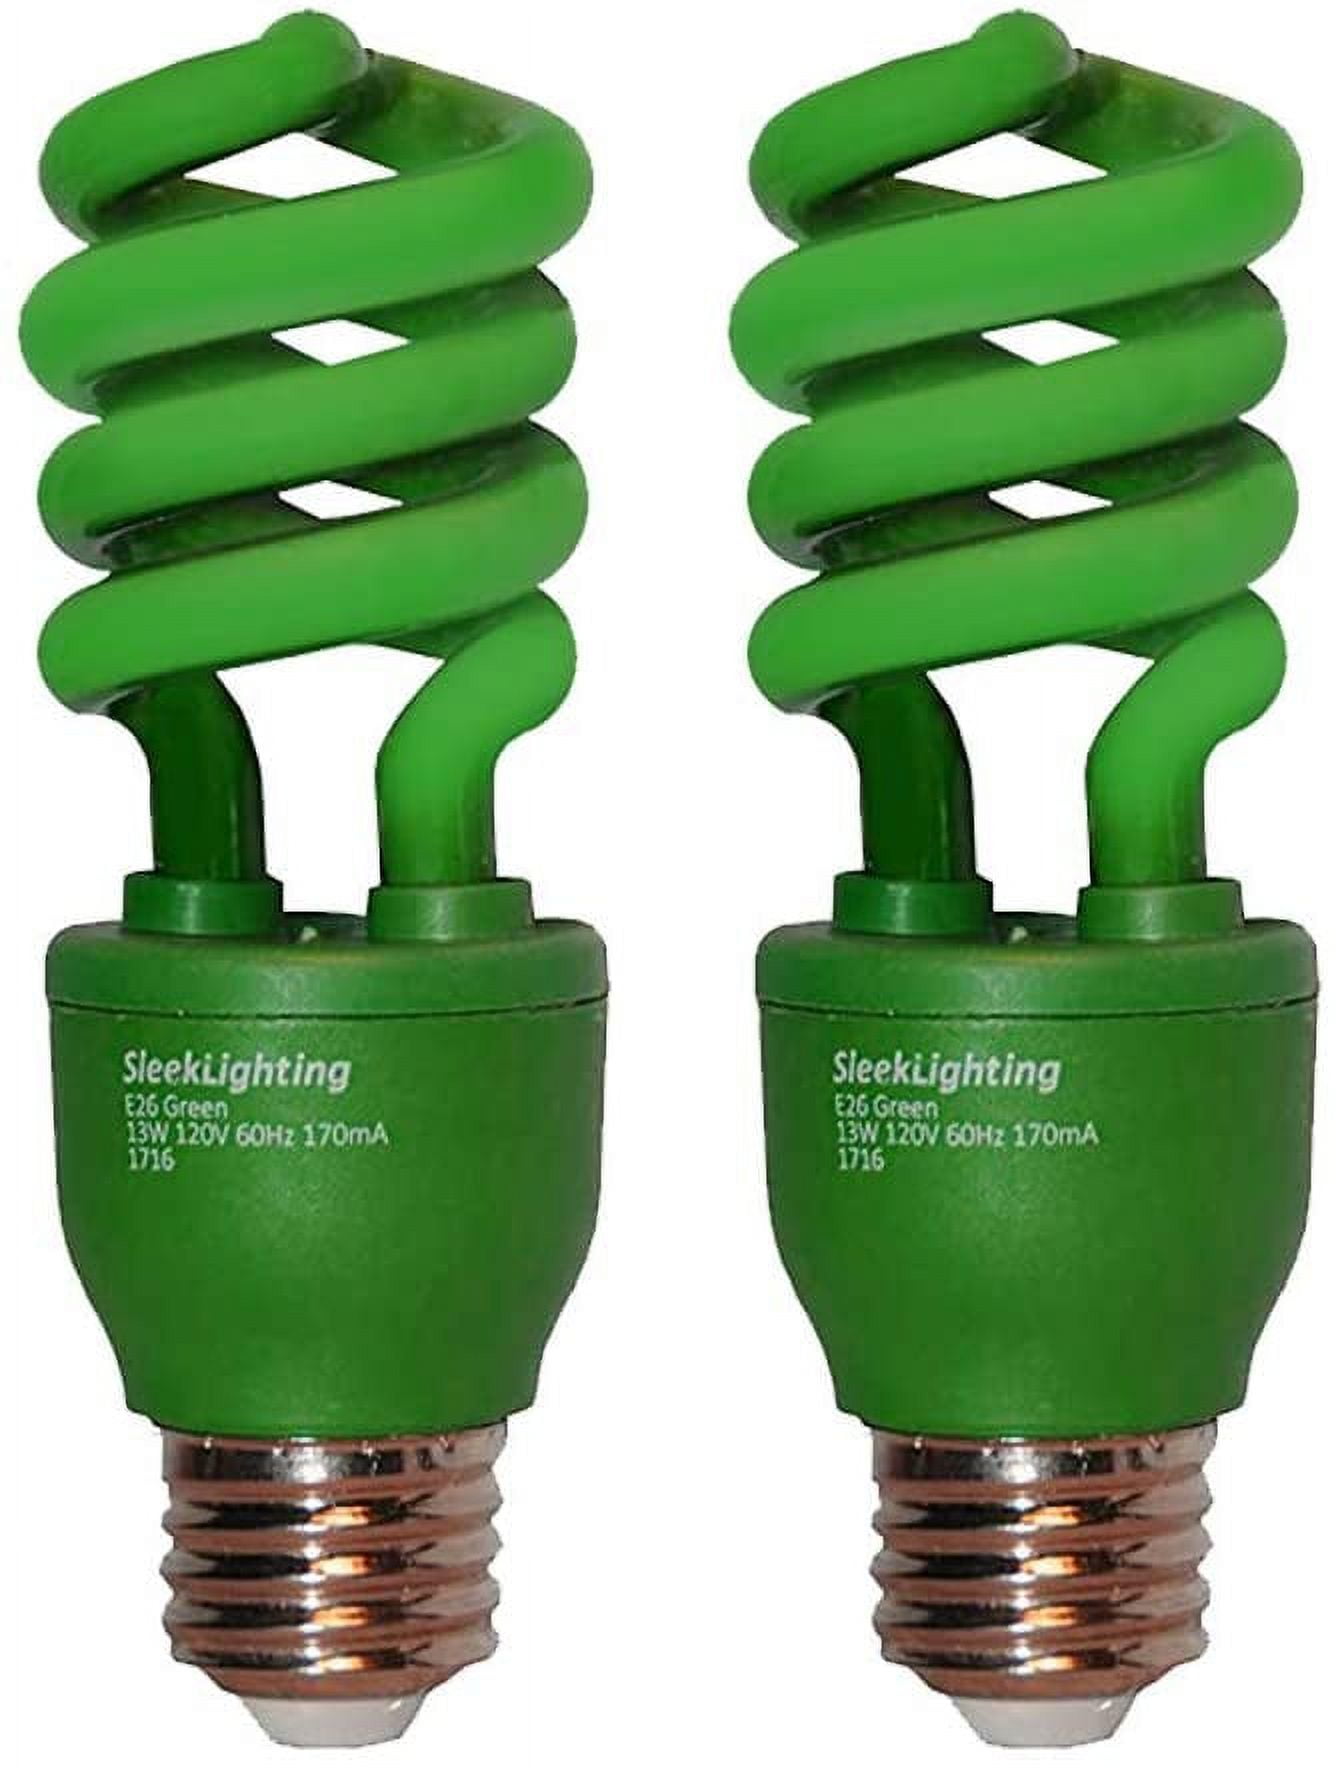 Sleeklighting 13 Watt Green Spiral Cfl Light Bulb 120volt E26 Medium